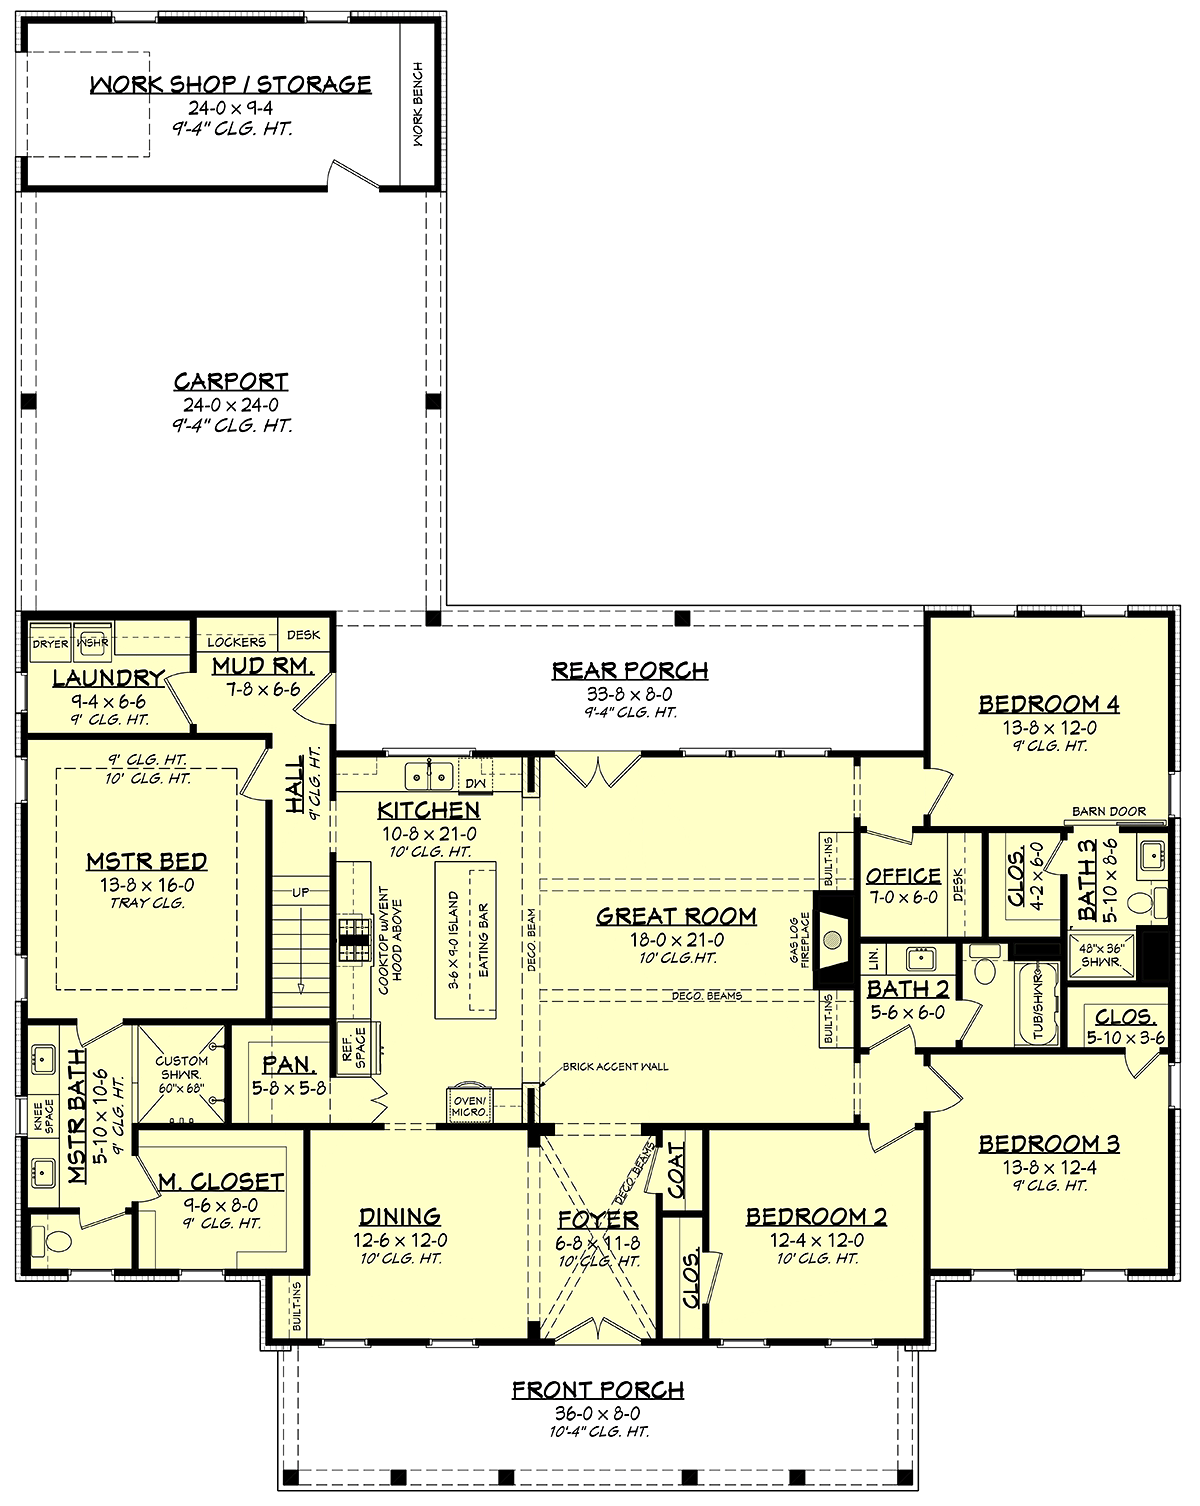 4 bedroom, 3 bath, 1,9002,400 sq. ft. house plans